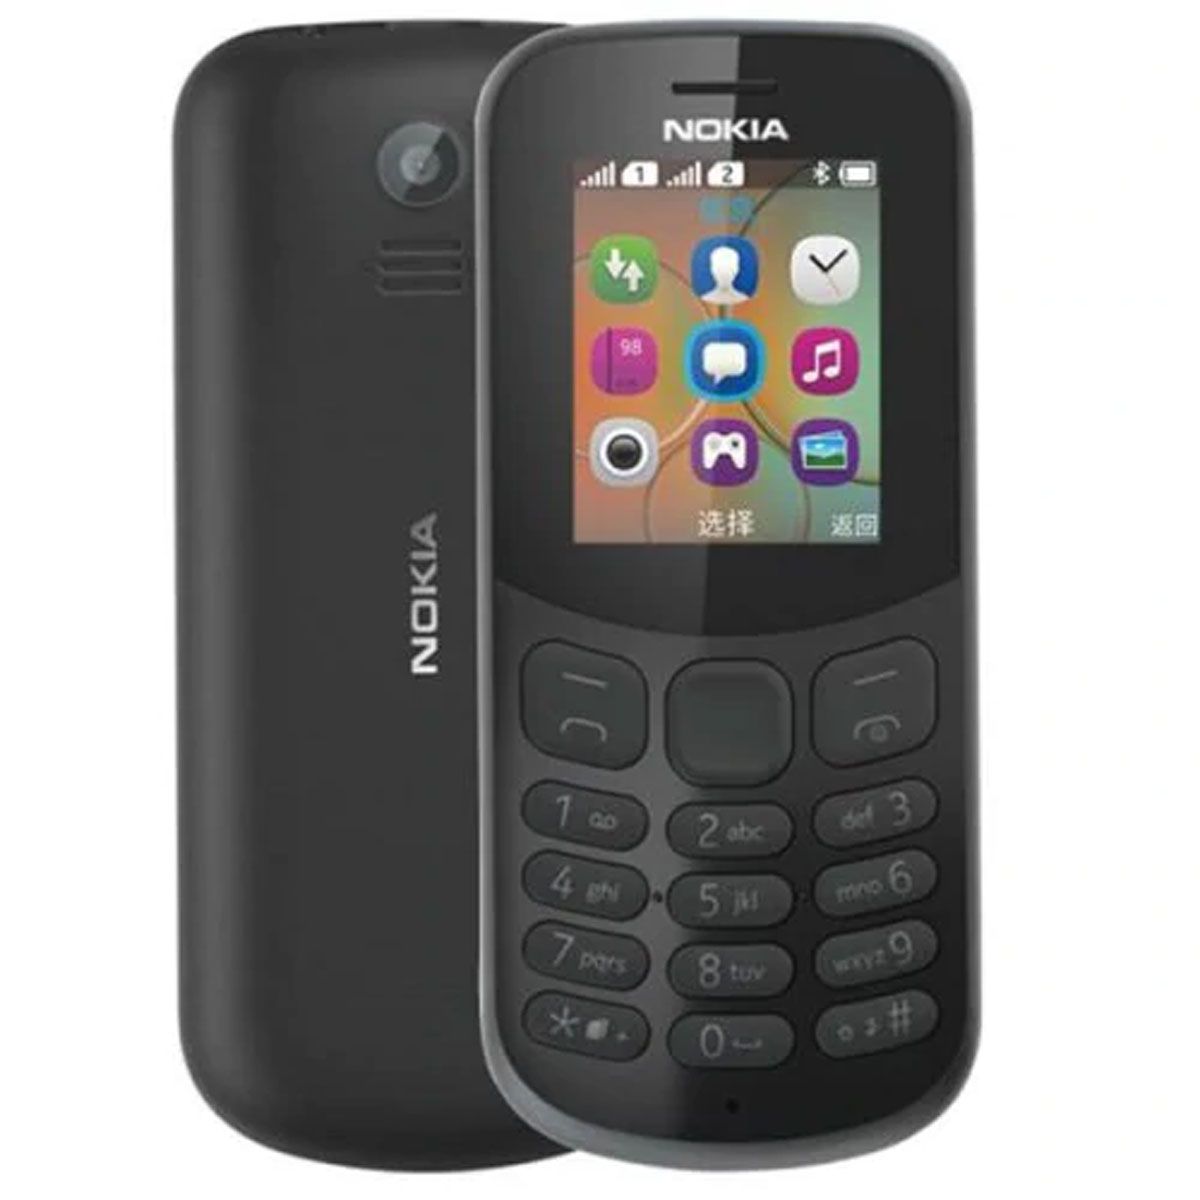 Nokia 130 - New fonezworldarklow